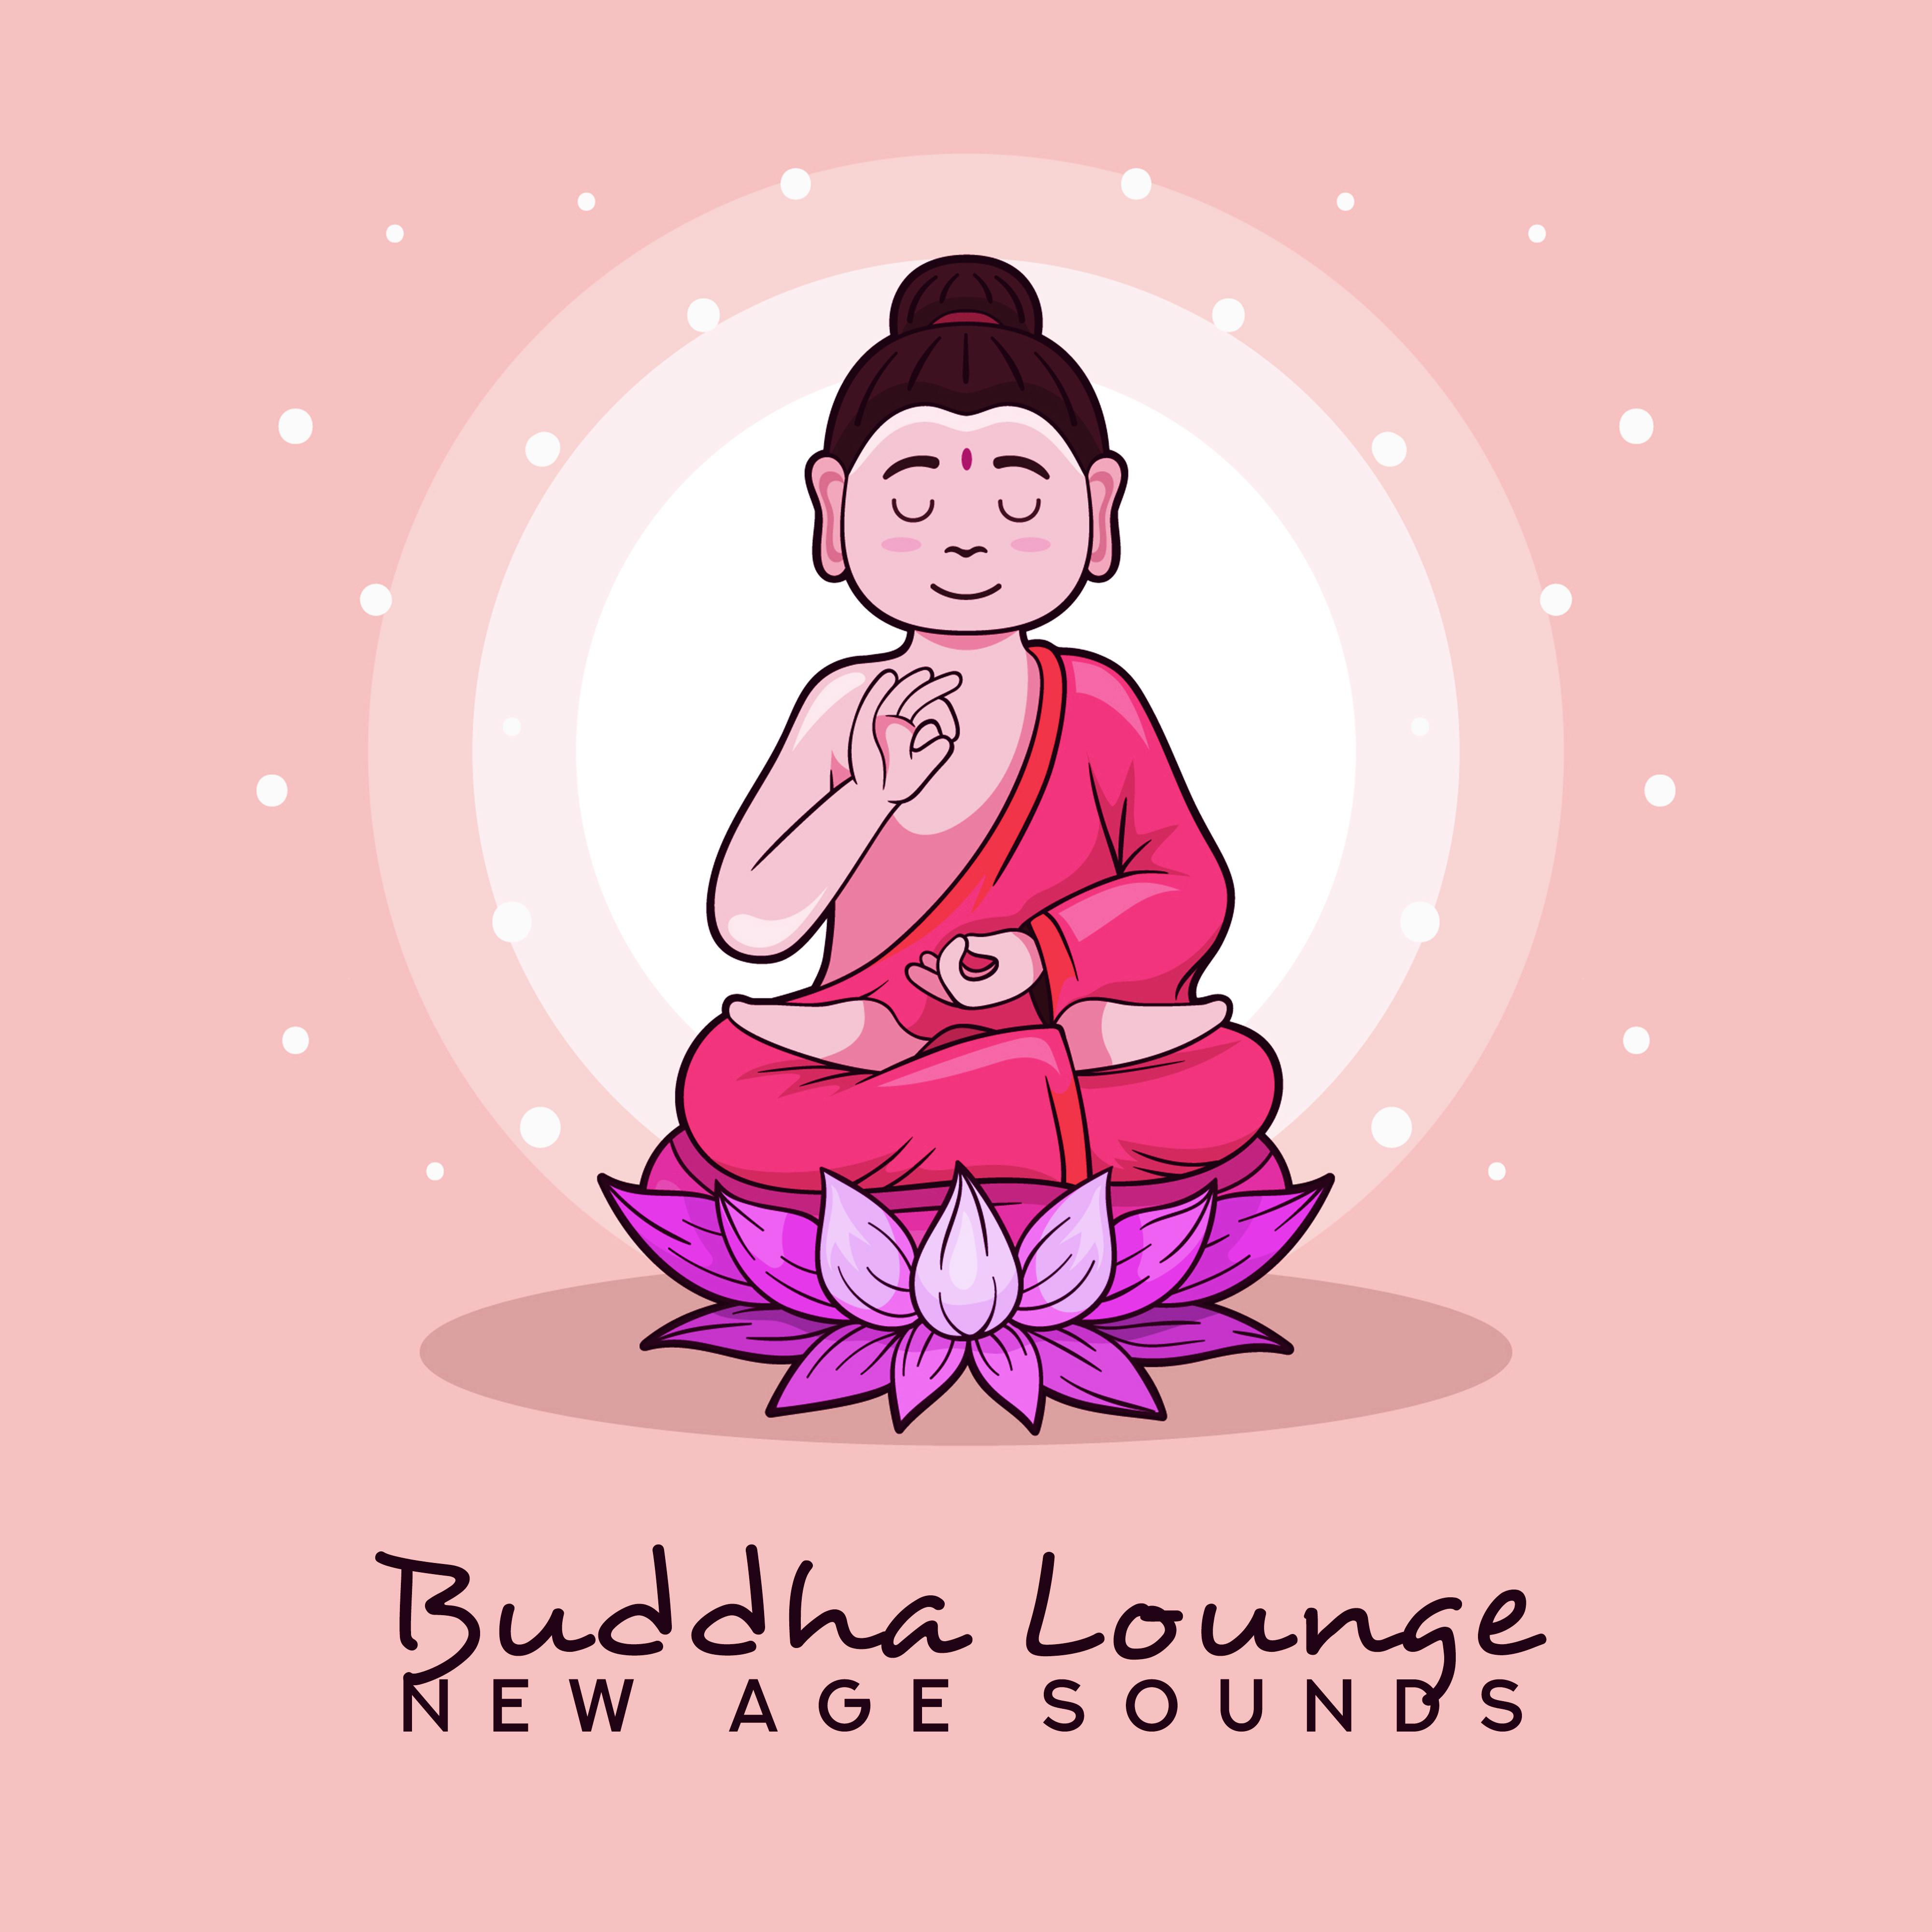 Buddha Lounge New Age Sounds: 15 Ambient Tracks for Deep Meditation & Relaxation, Chakra Healing, Yoga Poses Training, Inner Balance